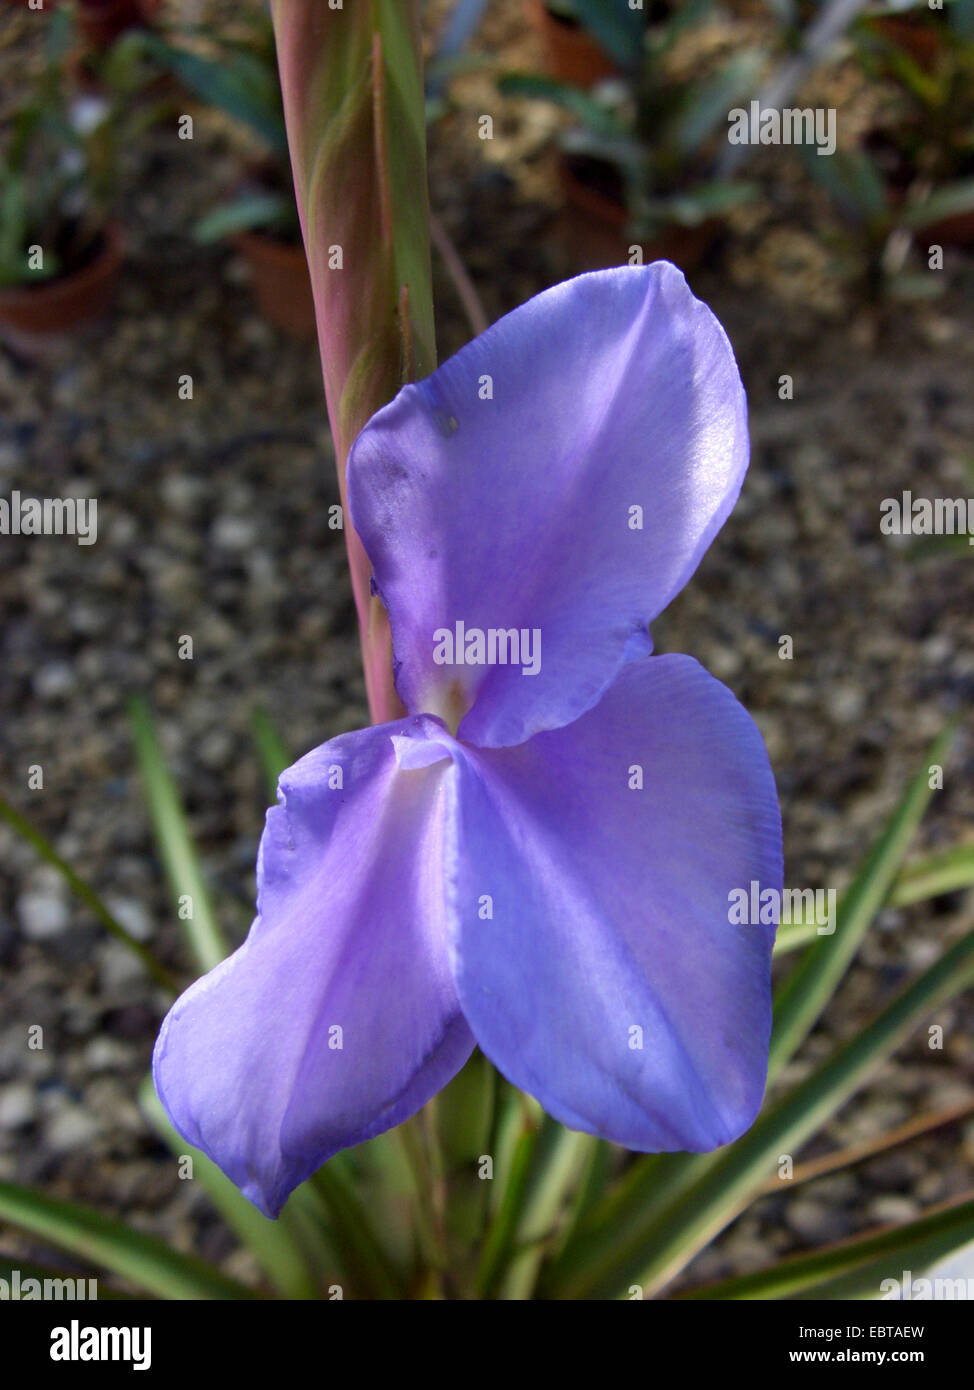 Tillandsia (Tillandsia lindenii), blooming Stock Photo